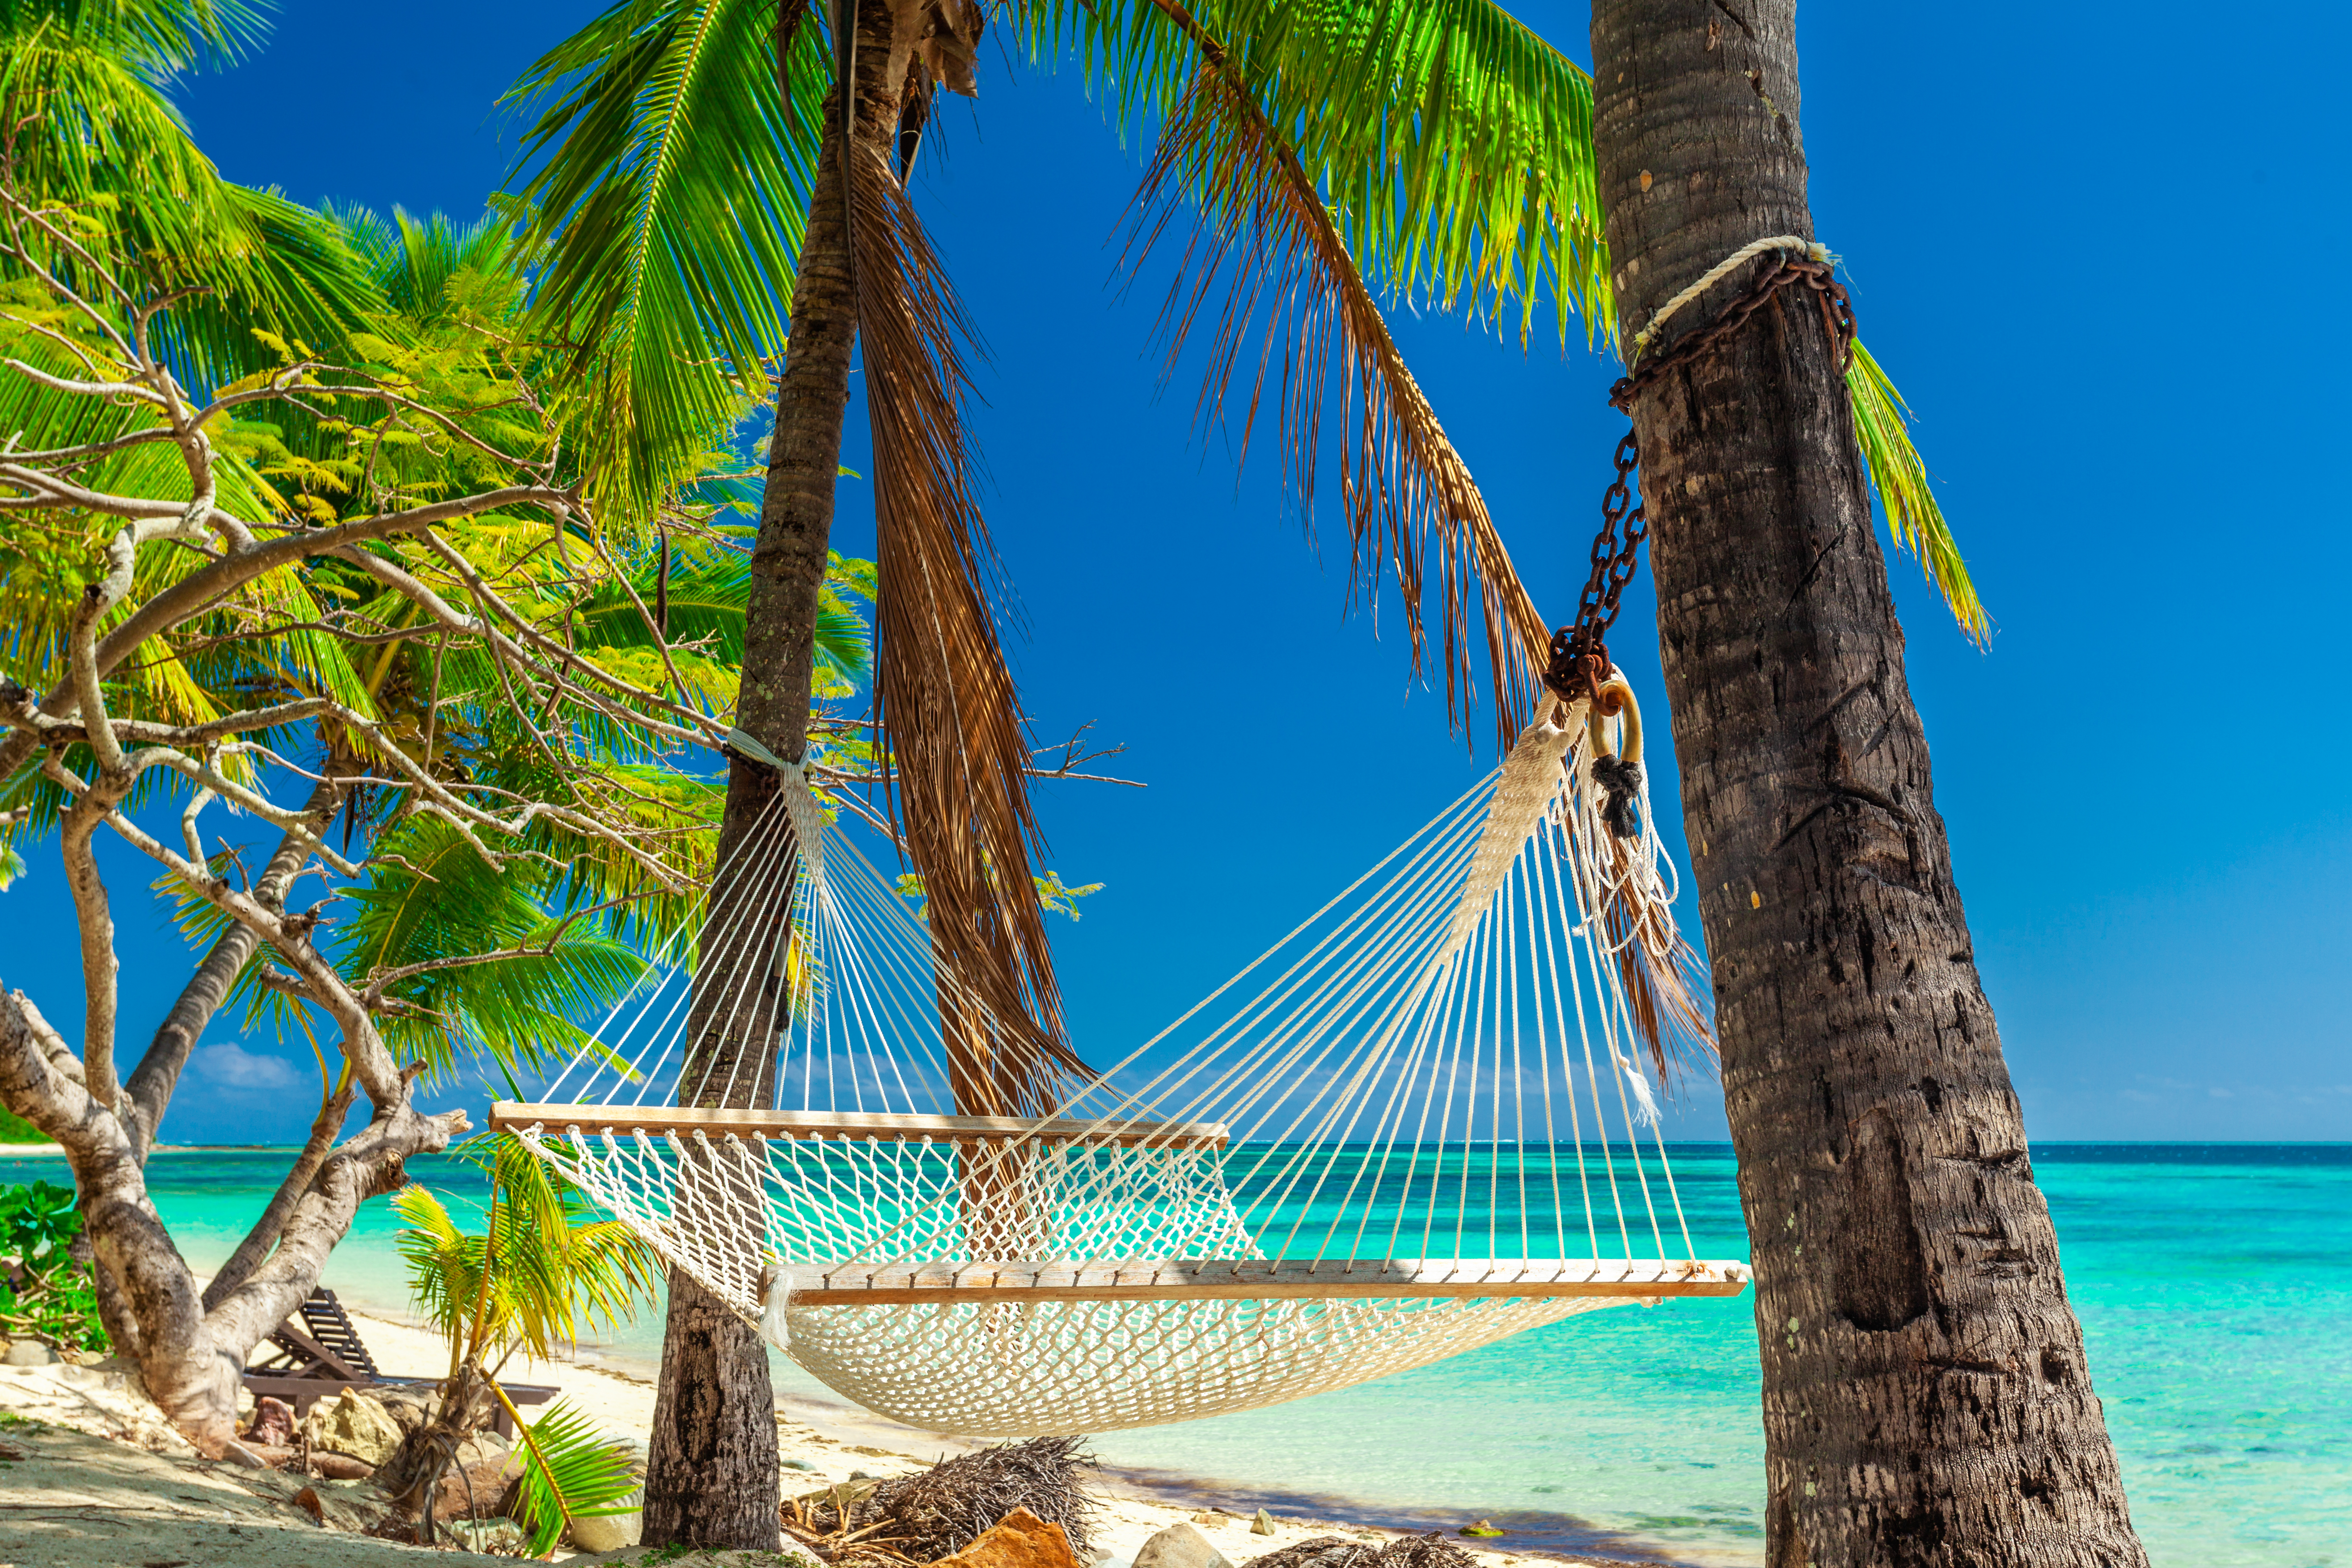 Empty hammock in the shade of palm trees, Fiji Islands